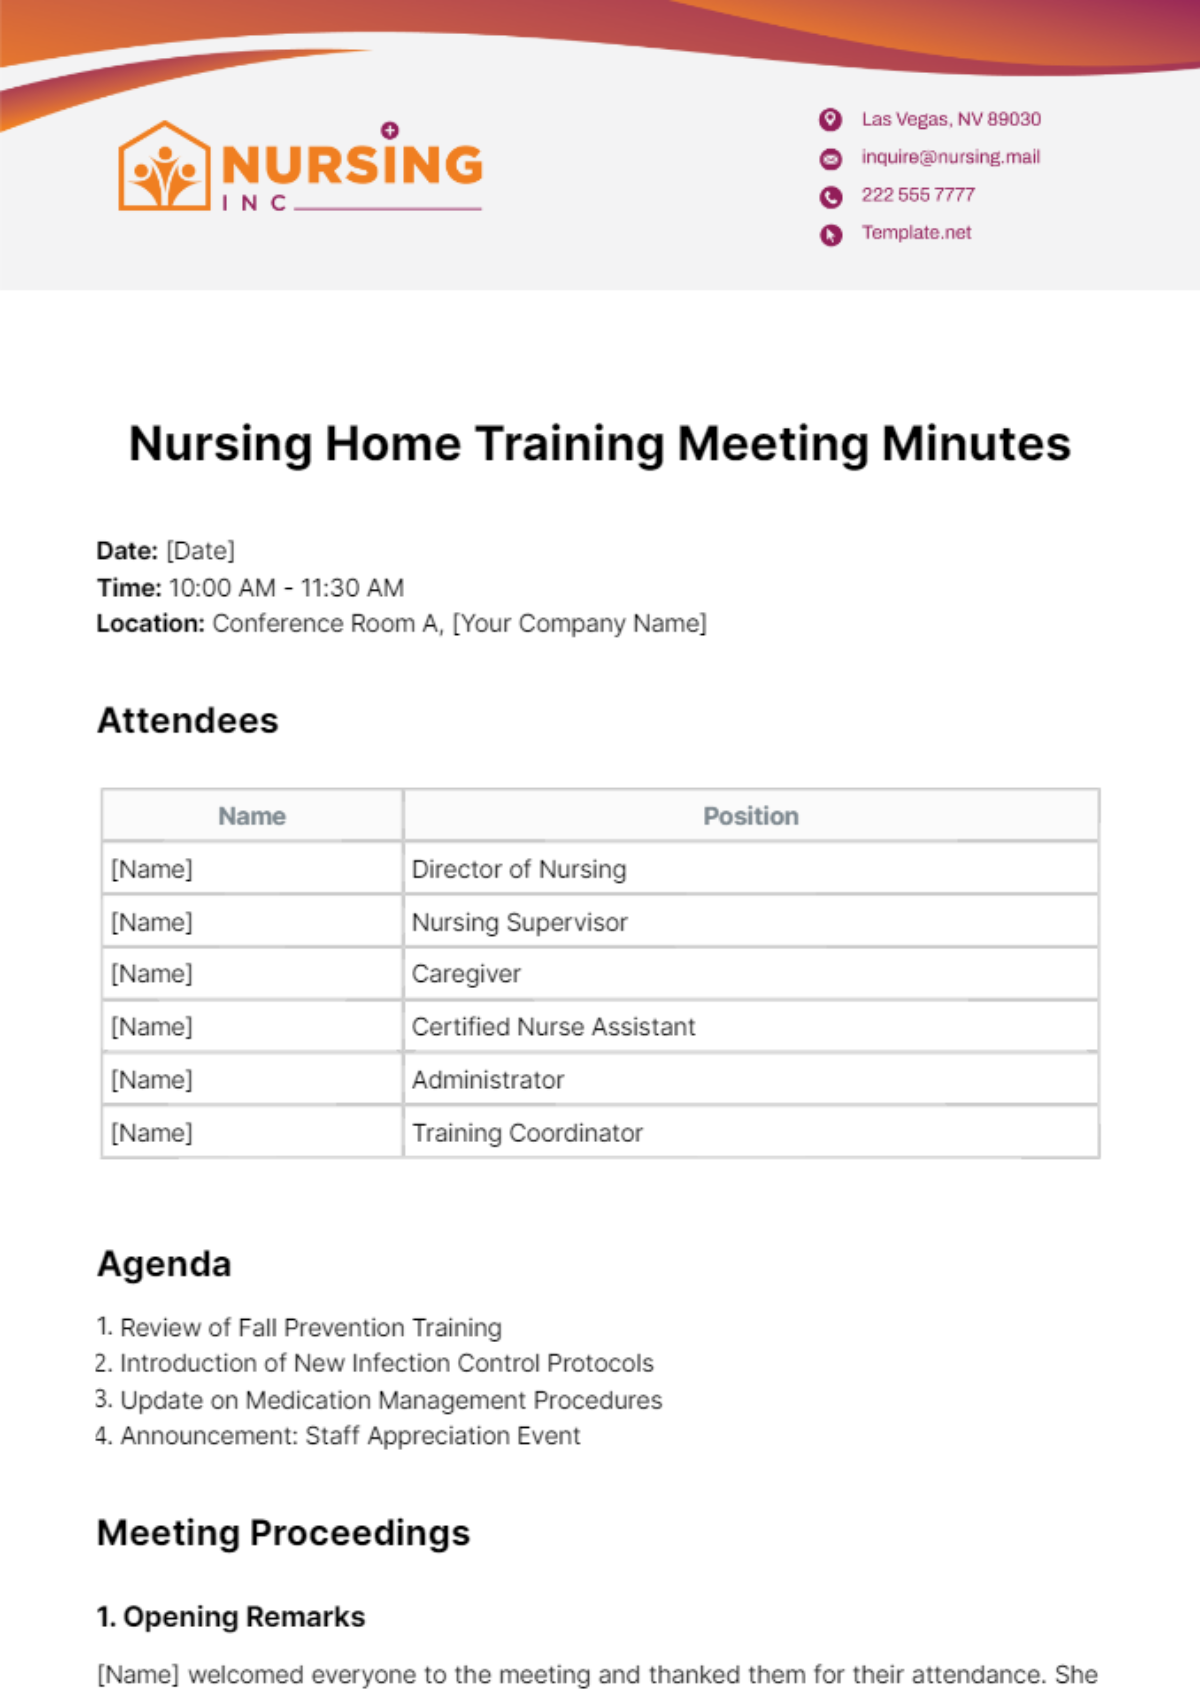 Nursing Home Training Meeting Minutes Template